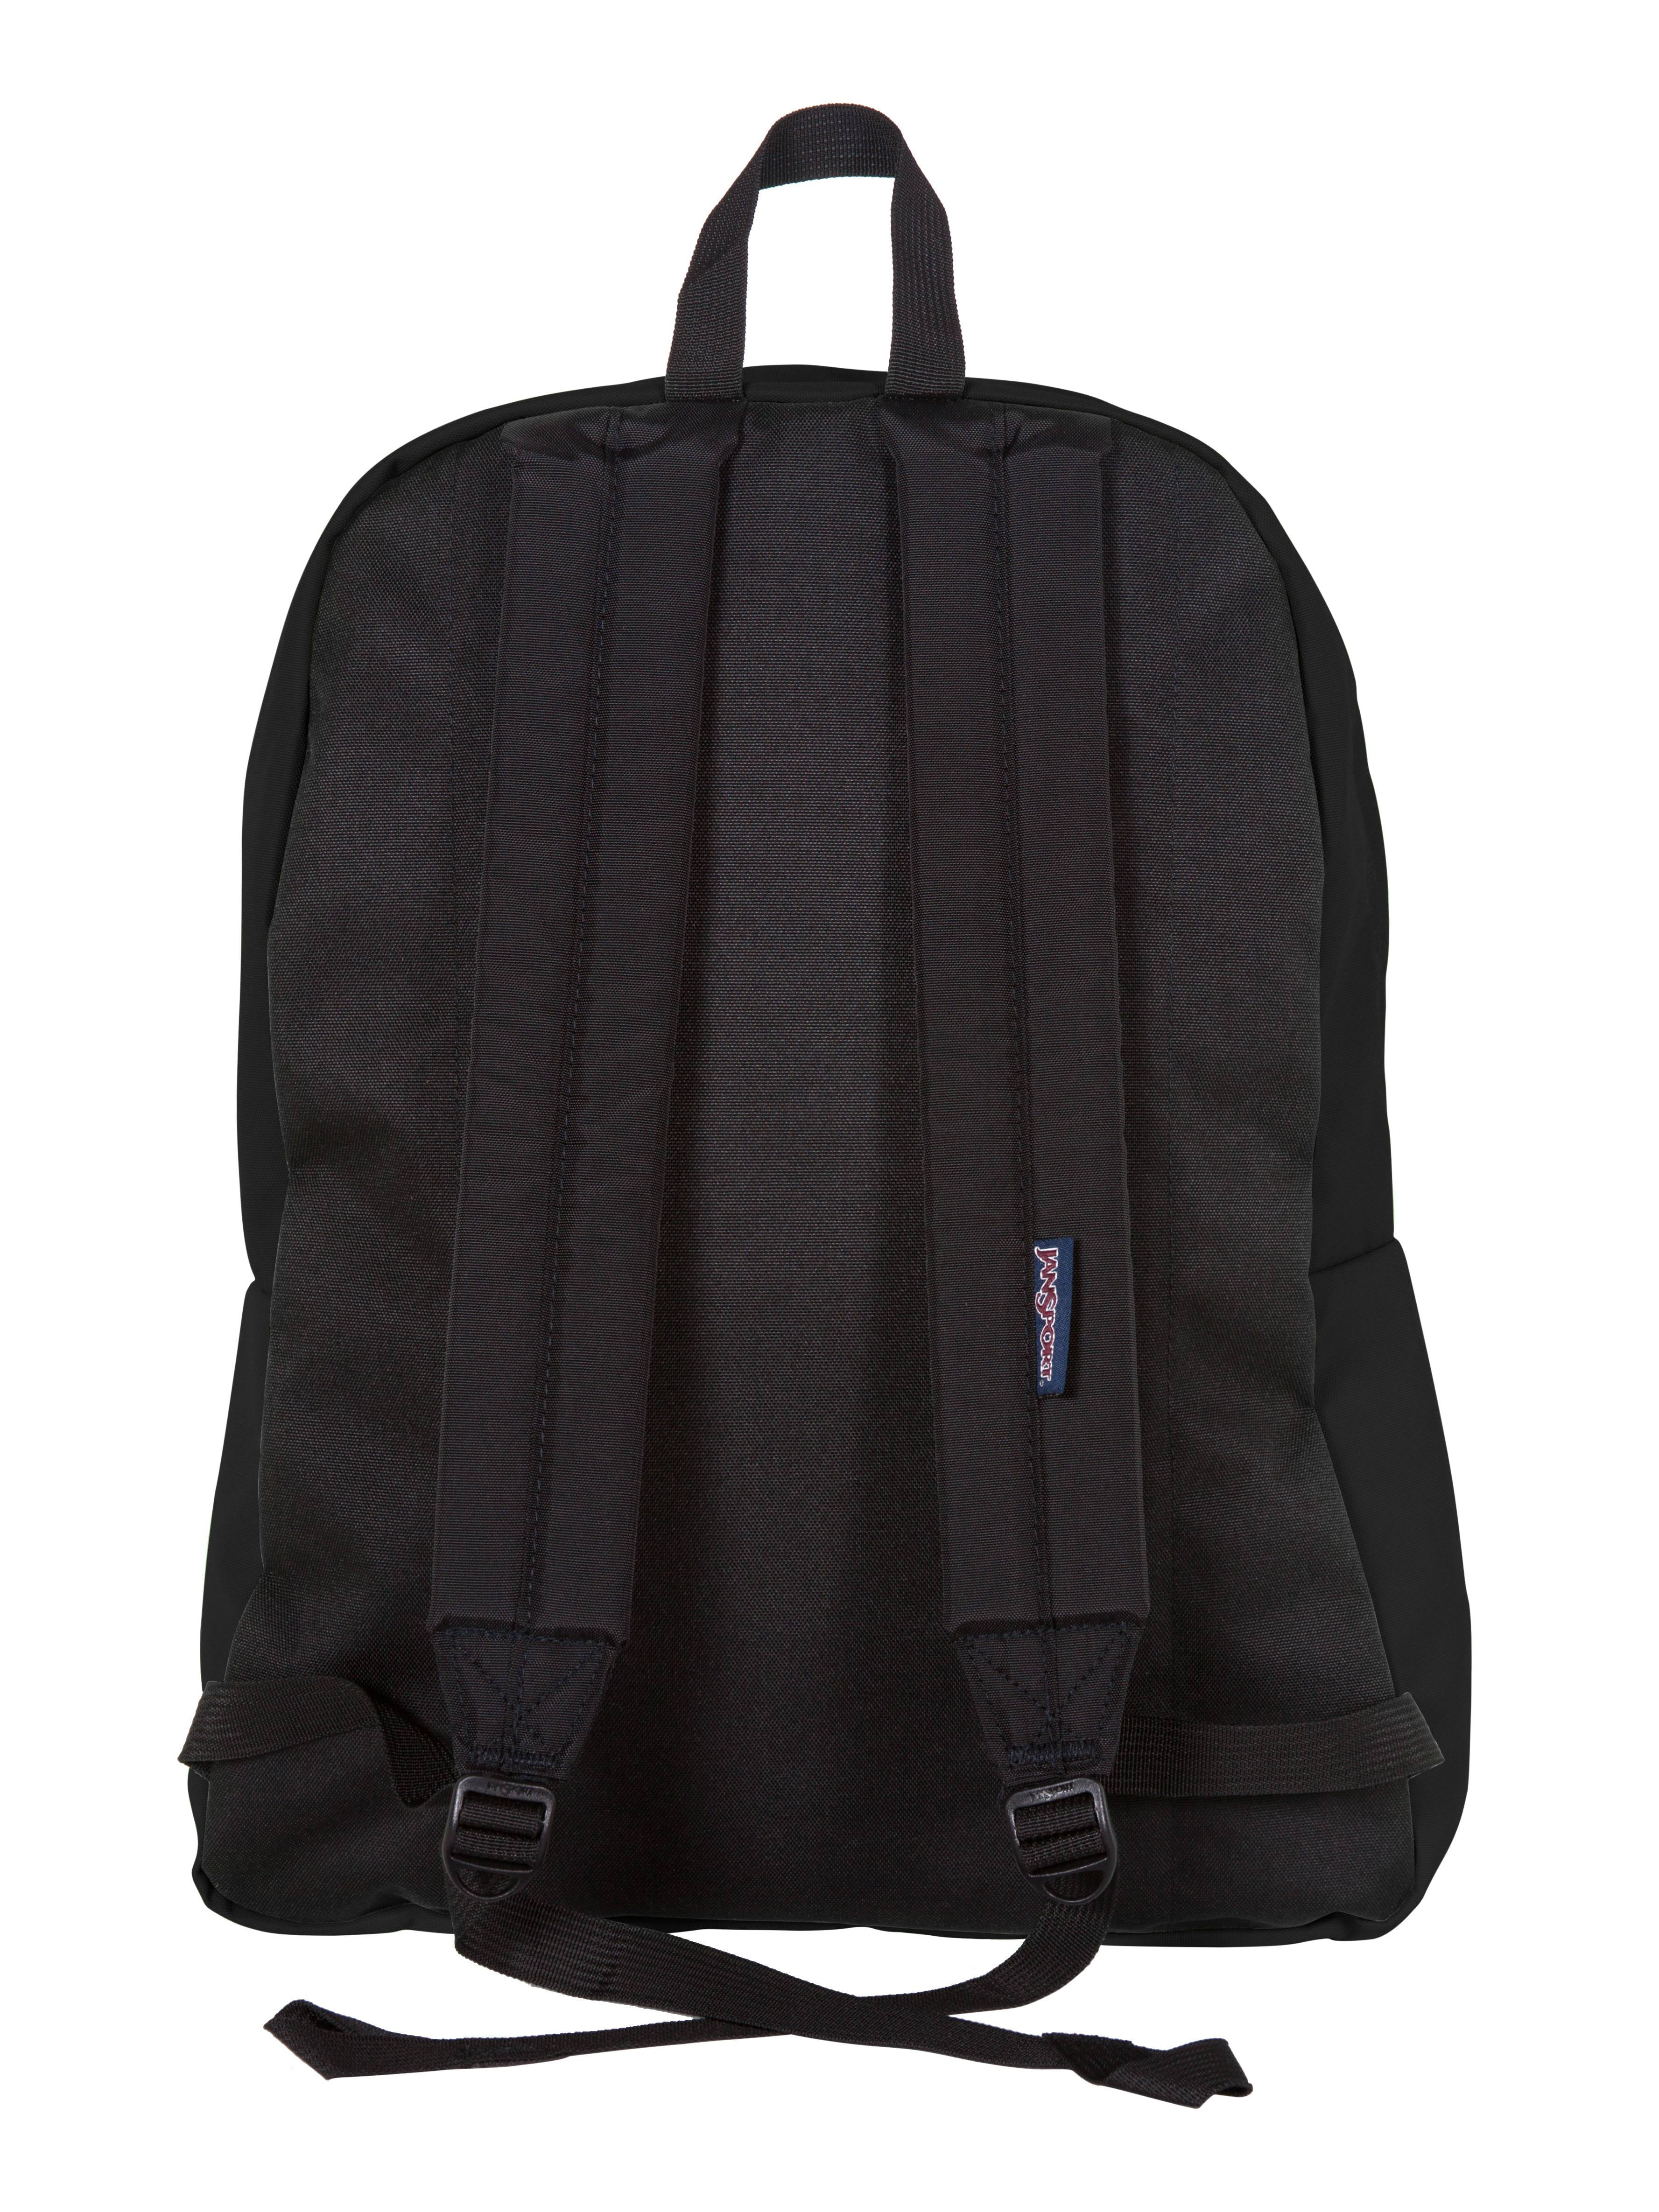 classic black jansport backpack